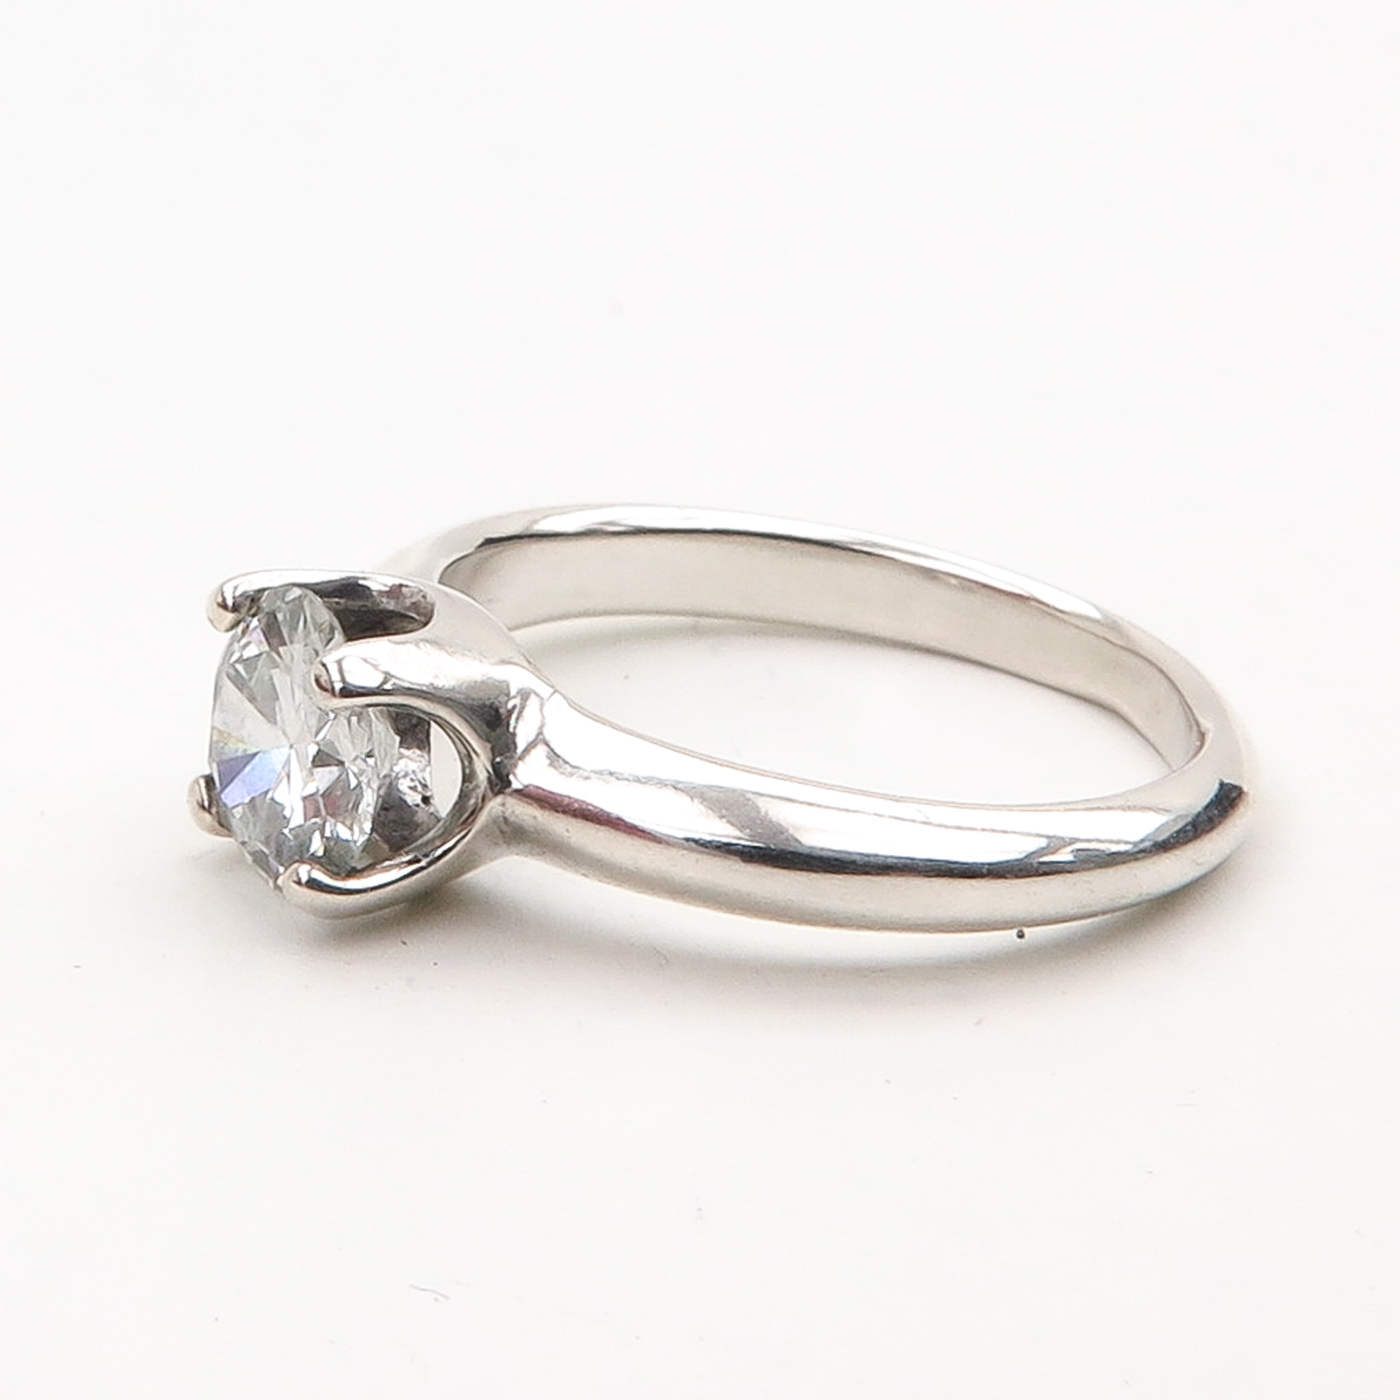 A Ladies Diamond Solitaire Ring 0.93 Carat - Image 2 of 2